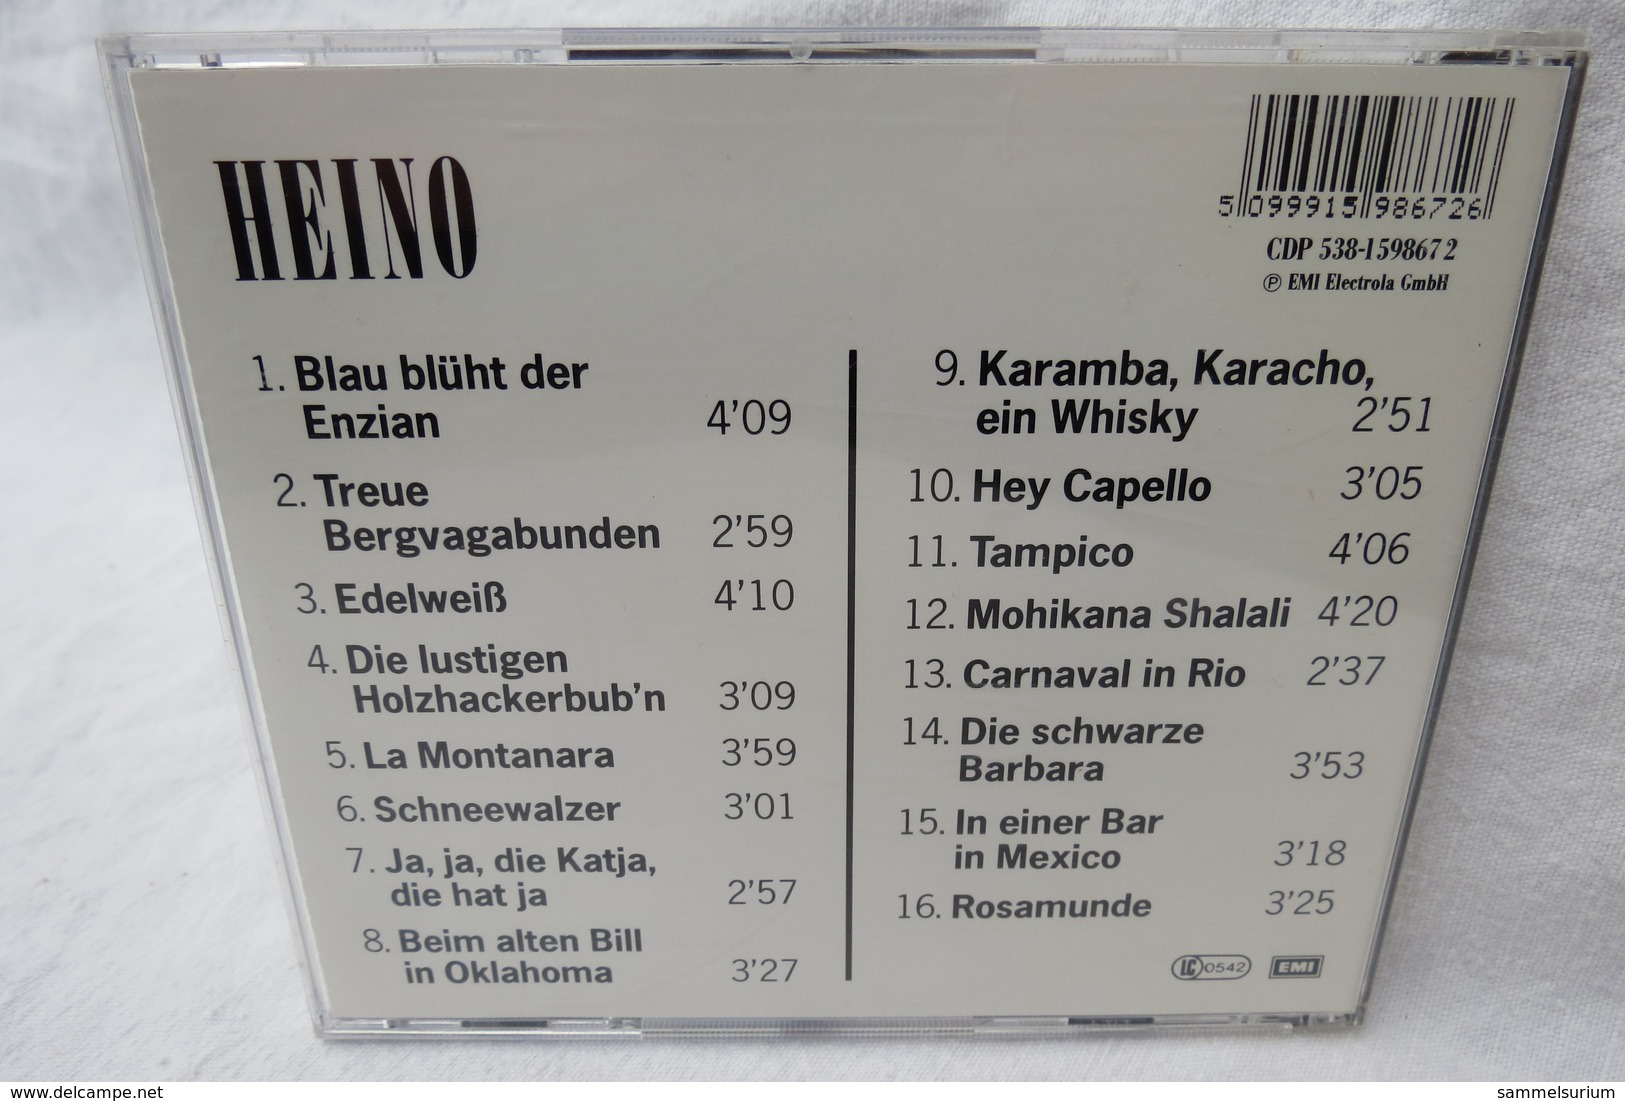 CD "Heino" Gold Collection - Autres - Musique Allemande